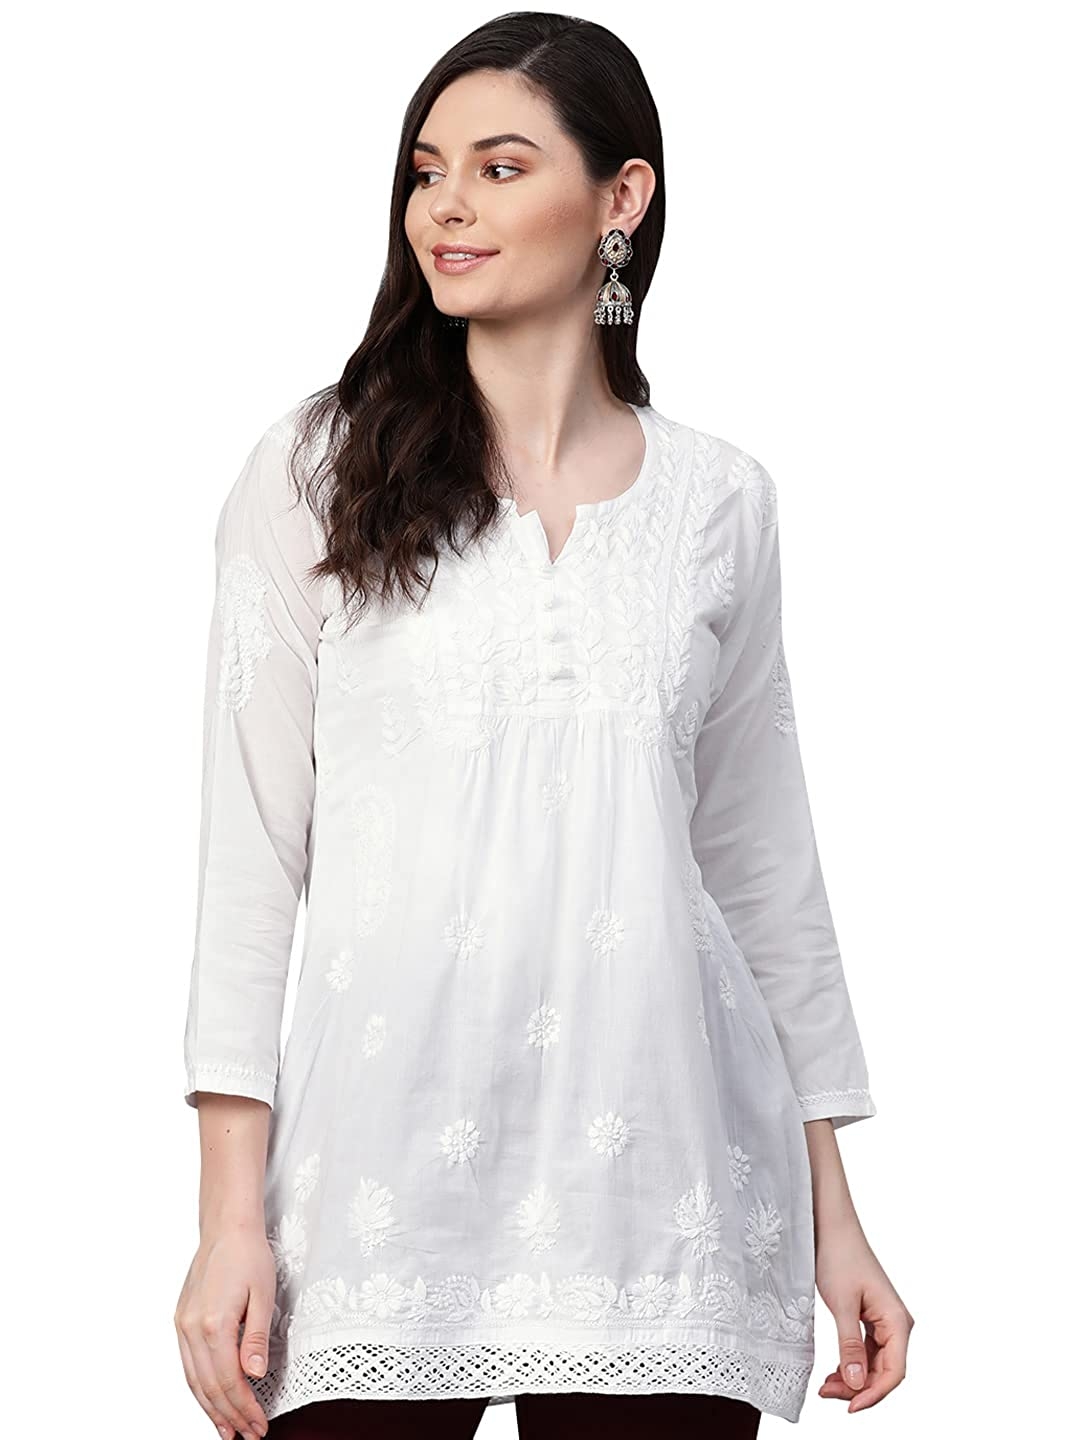 Buy Light Green & White Gala Boti Lucknowi Chikankari Casual Cotton Kurti  Online at Kiko Clothing